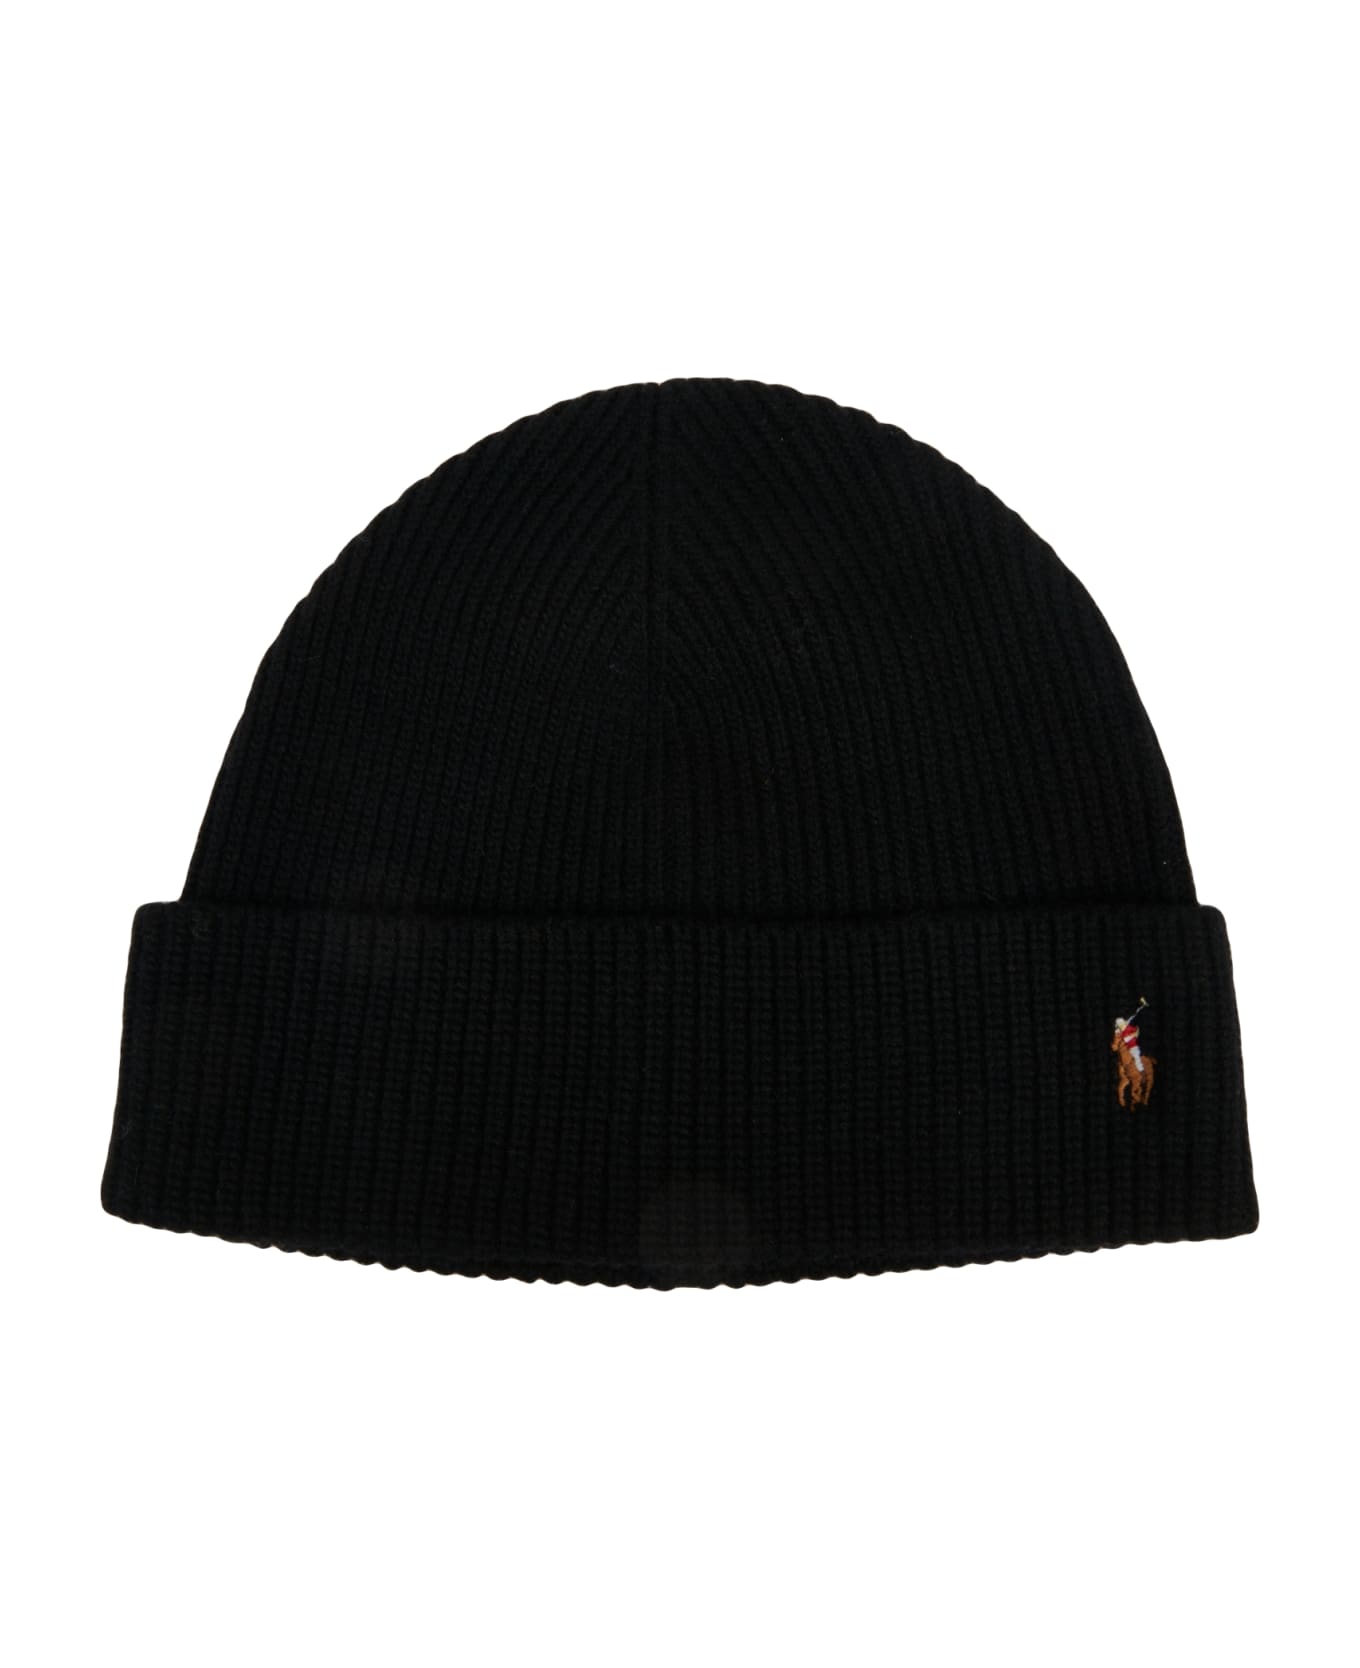 Polo Ralph Lauren Cuff Hat - Black 帽子